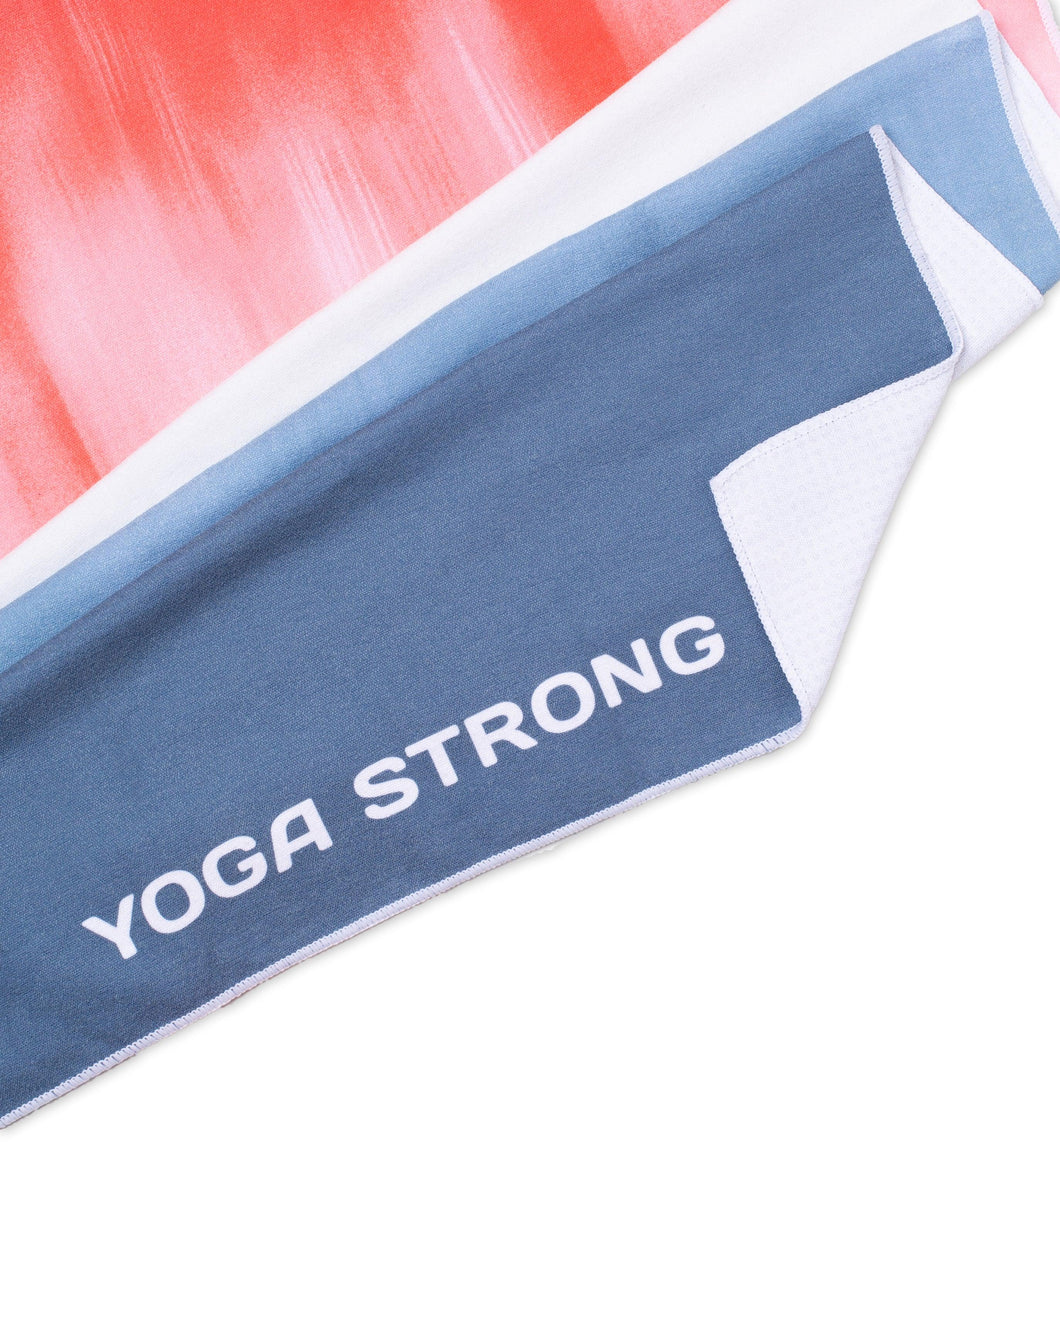 CG Travel Workout Bundle (2 item) - Yoga Strong